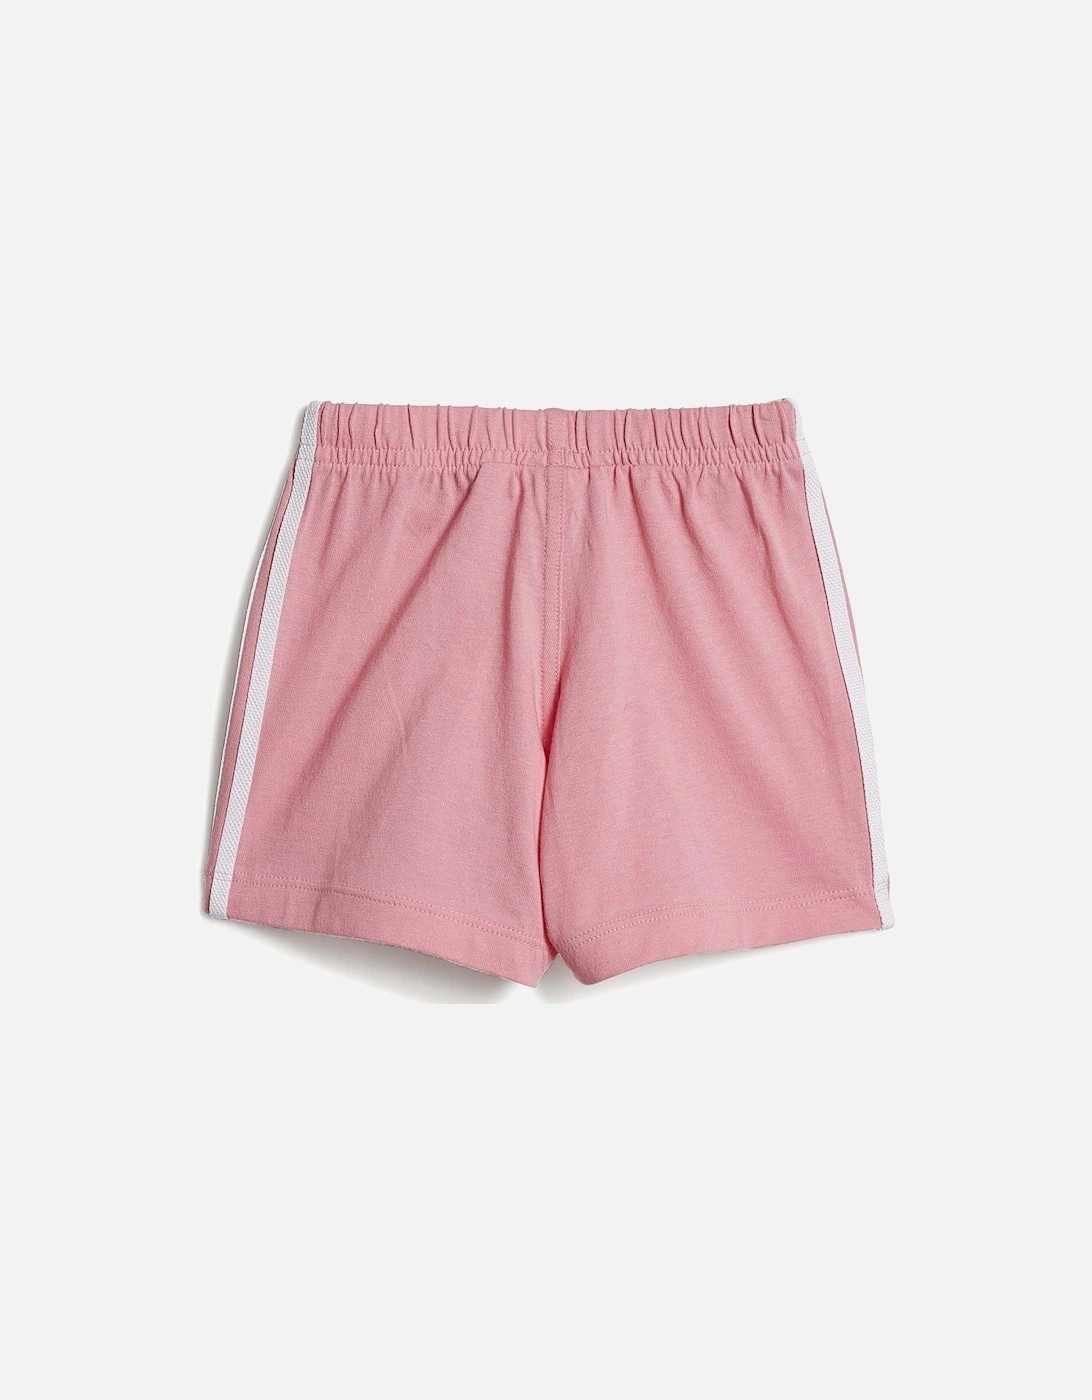 Infant Trefoil Shorts T-Shirt Set